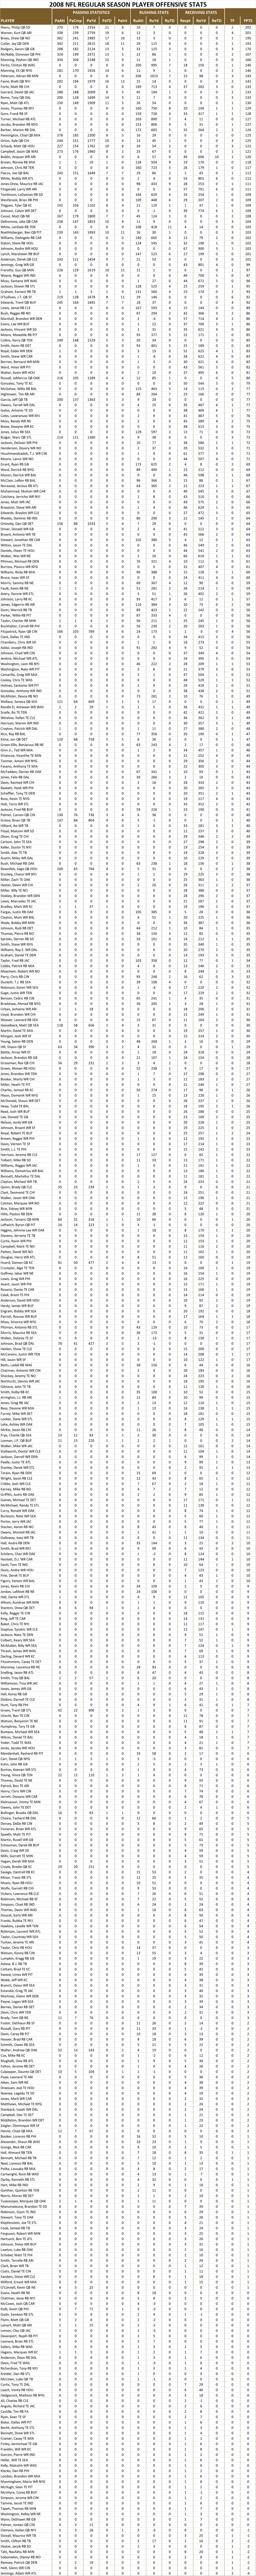 2008 National Football League Pool Season Player Offensive Stats